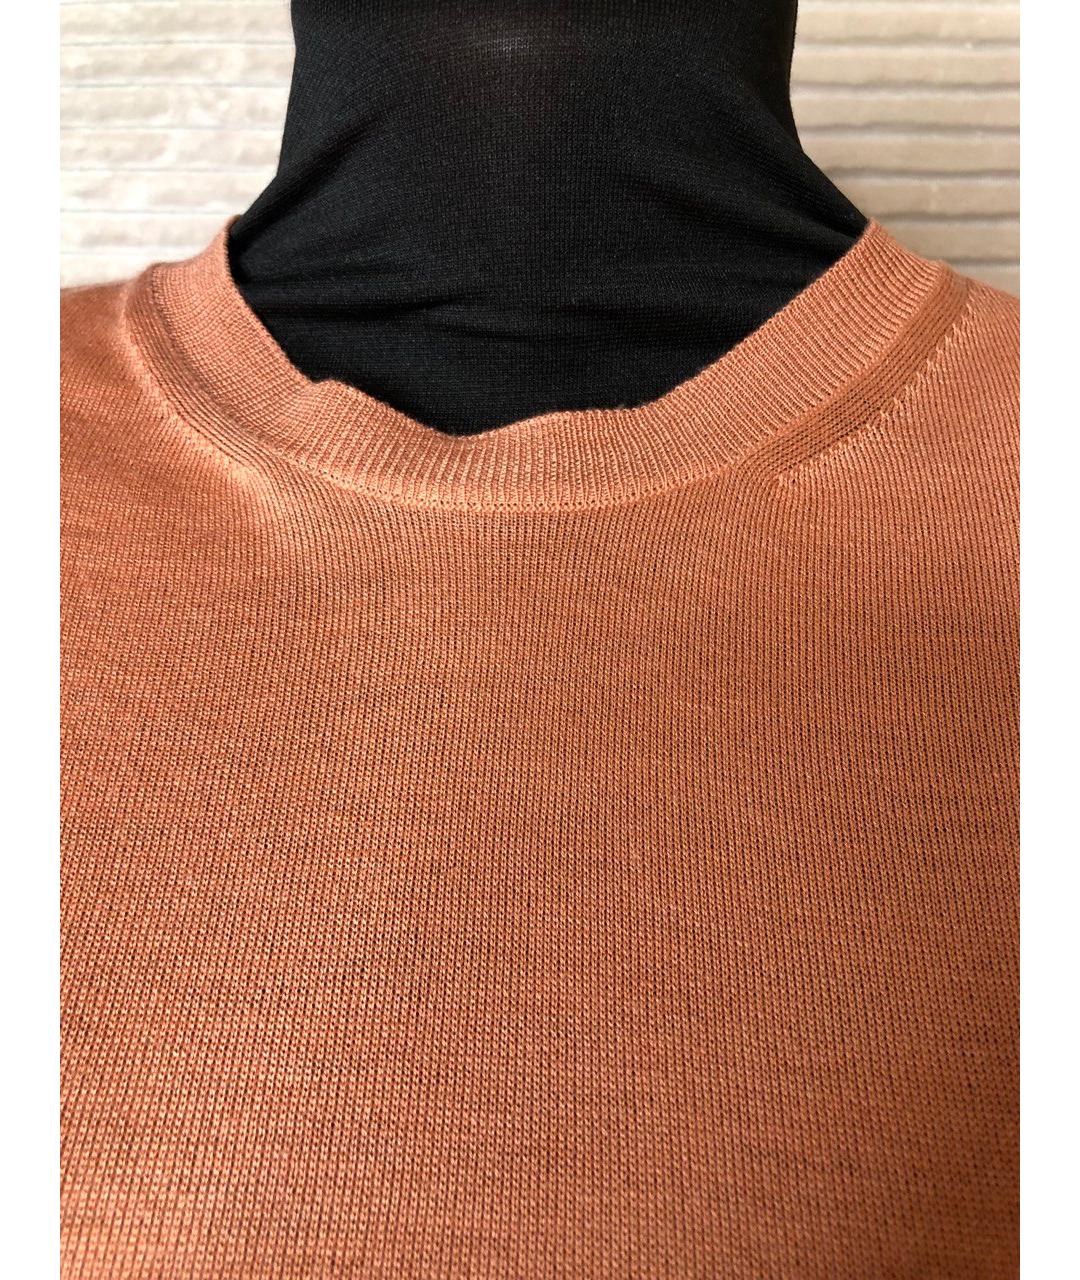 STELLA MCCARTNEY Коричневый шерстяной джемпер / свитер, фото 3